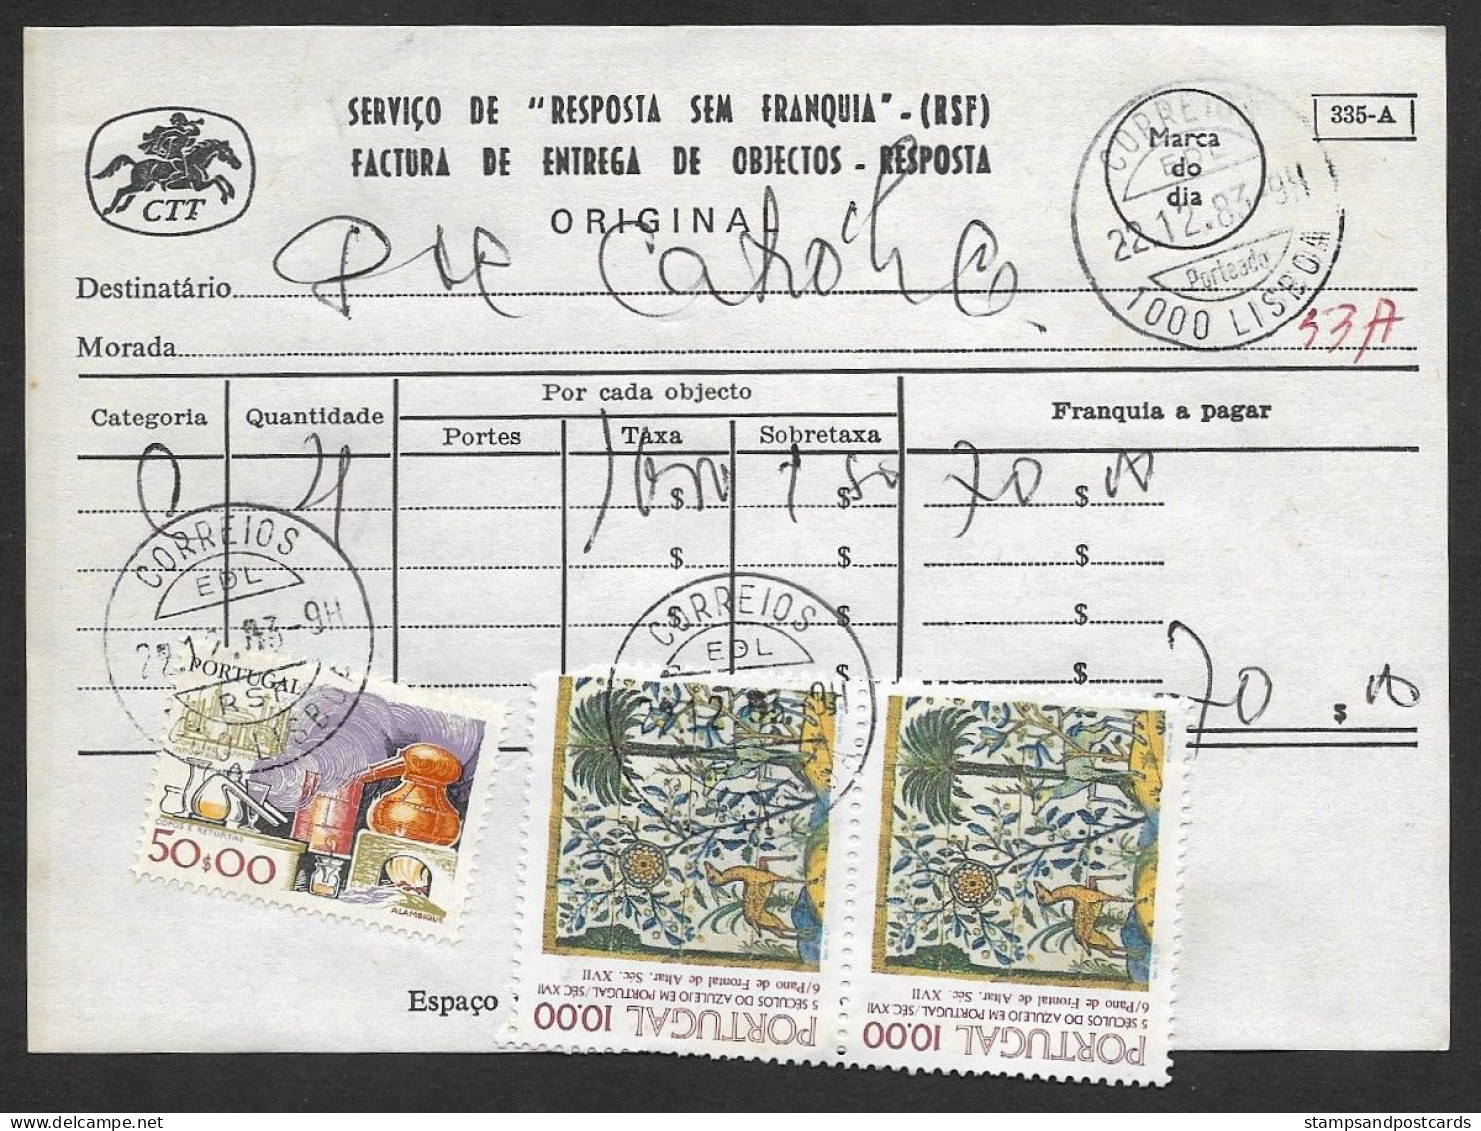 Portugal Document Timbré Avec Cachet A Date RSF Réponse Payée 1983 Date Stamp Business Reply Service - Marcophilie